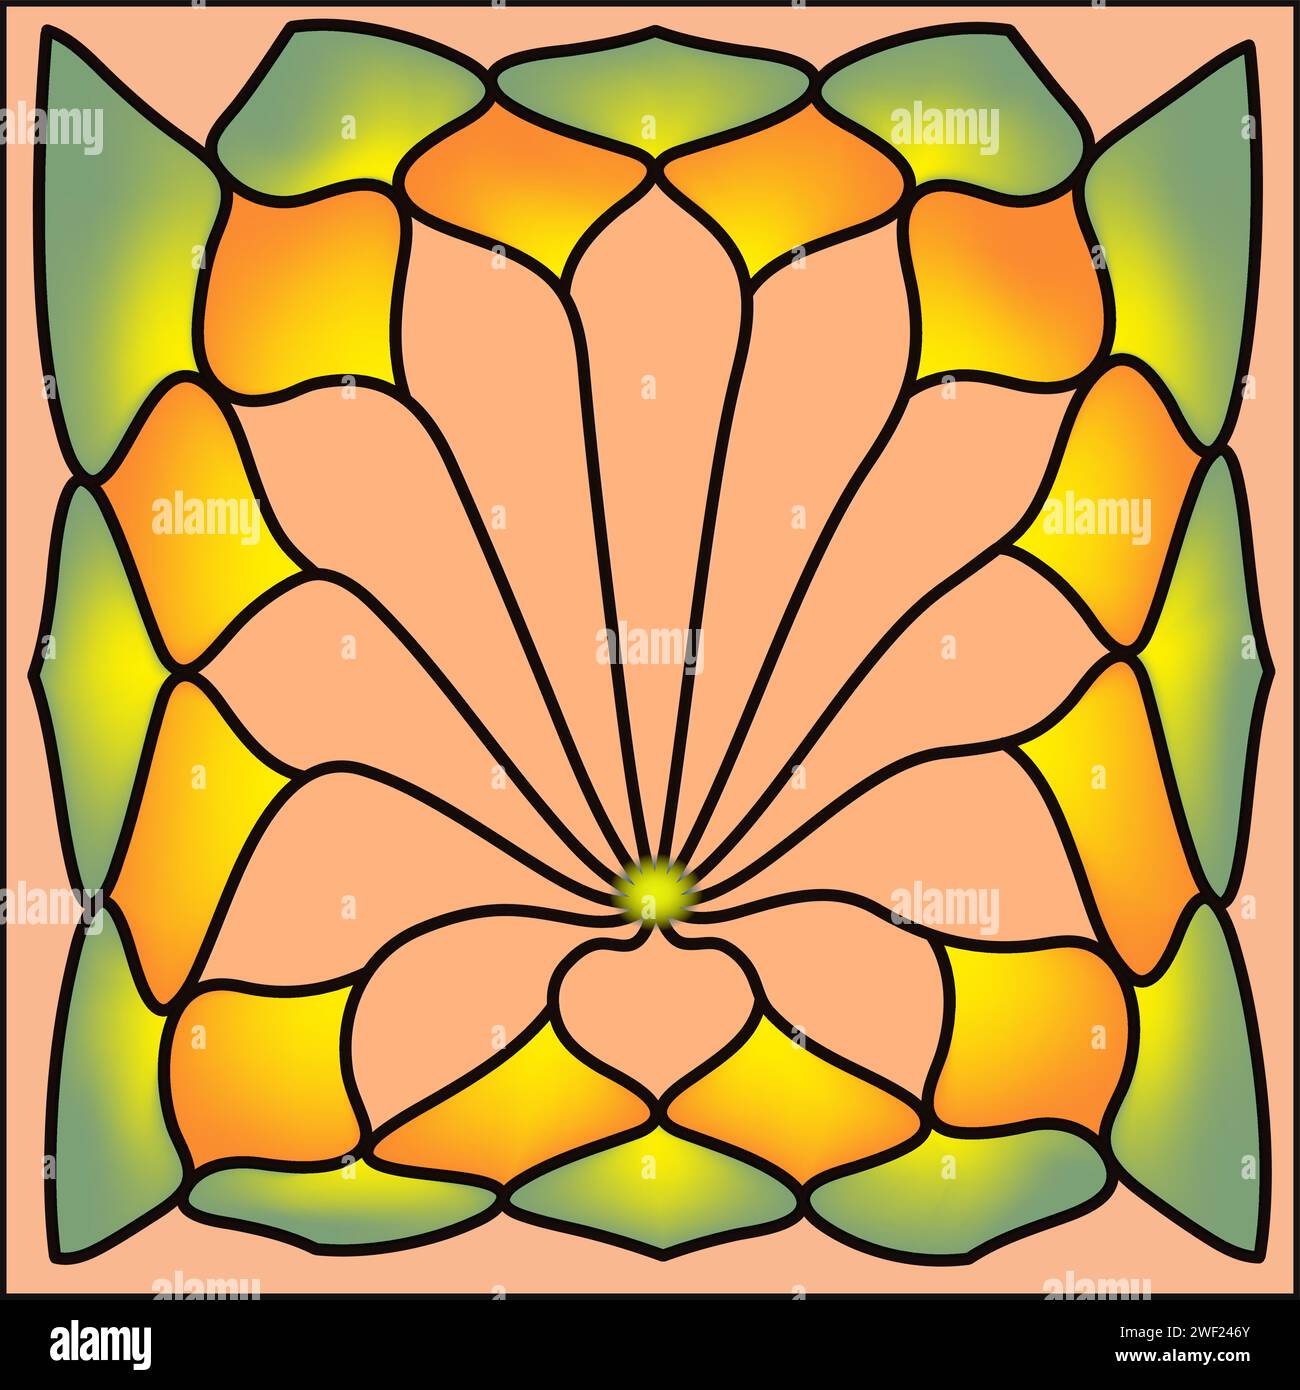 Buntglasfenster mit Mosaikblumen. Kaleidoskop Muster Vektor-Illustration Stock Vektor